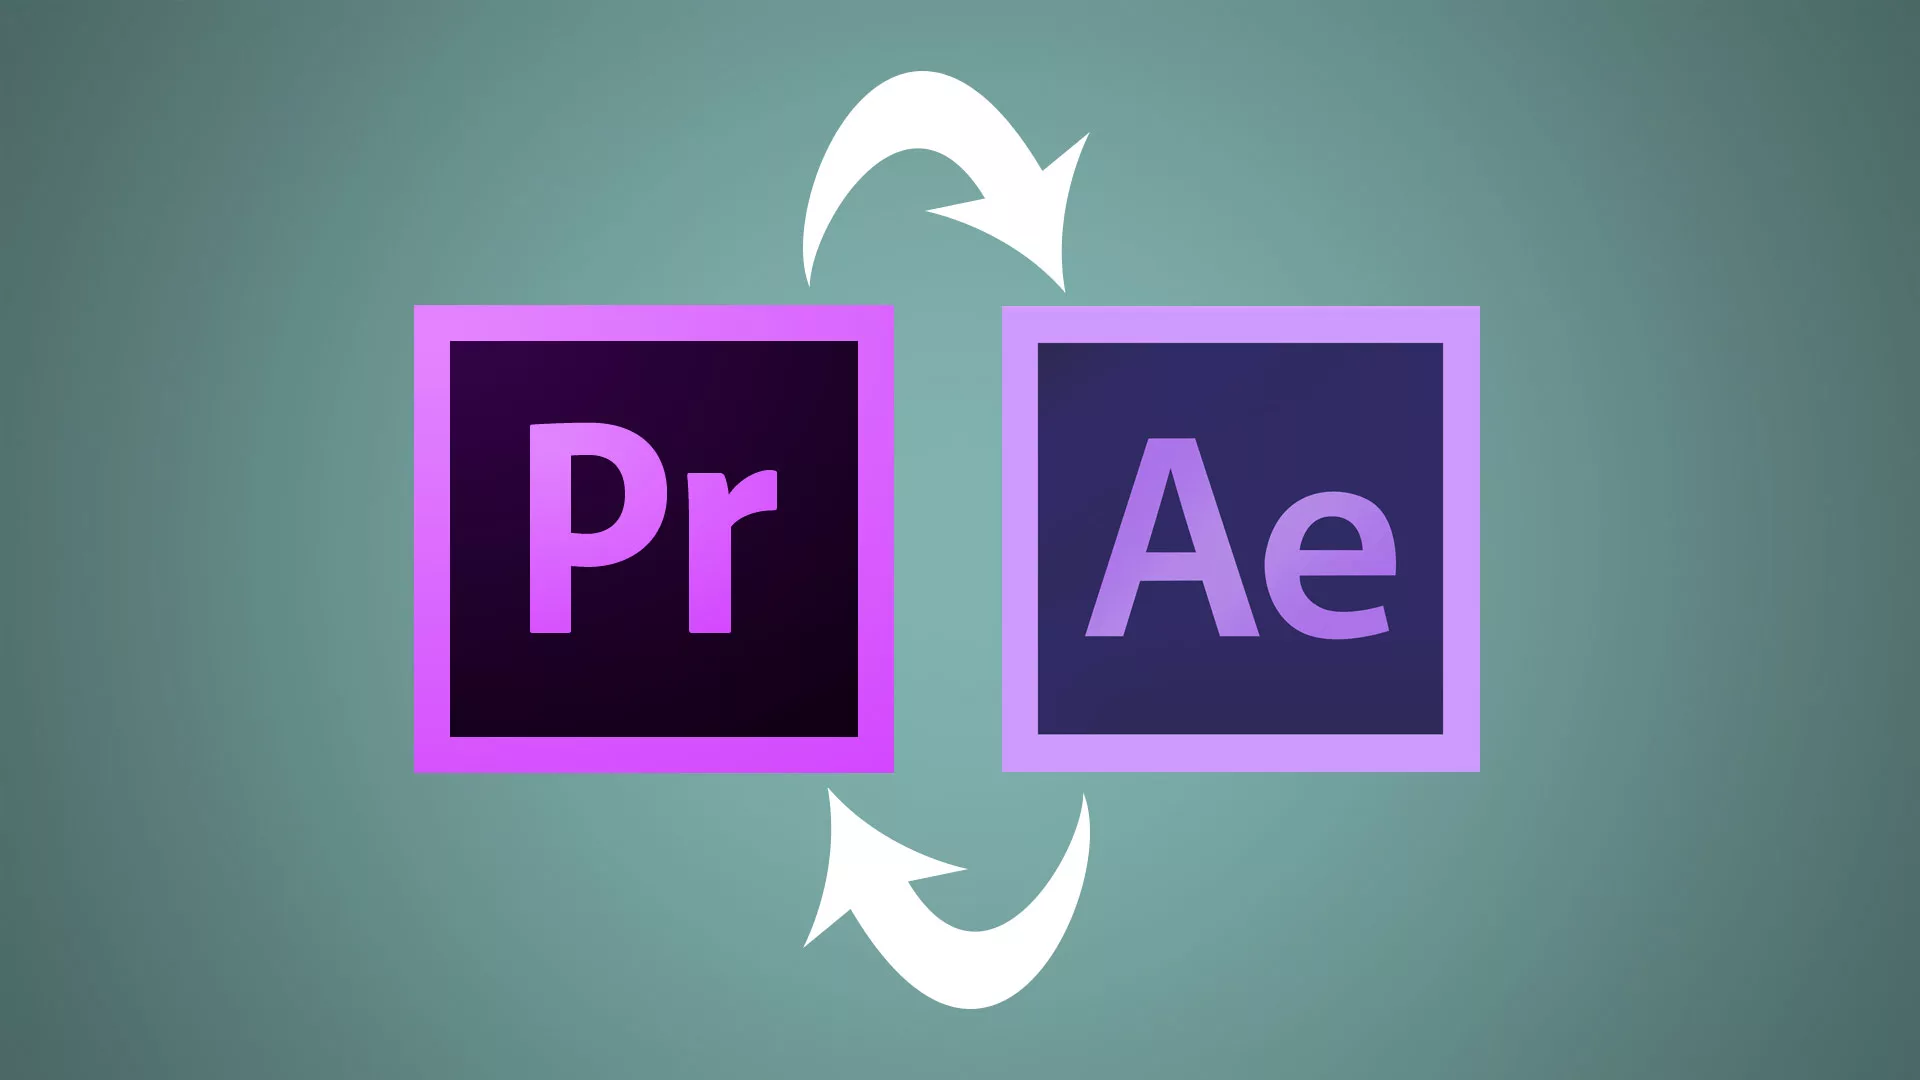 Adobe premiere effect. Premiere Pro after Effects. Adobe Premiere и Adobe after Effects. Премьер про и Афтер эффект. Премьер фотошоп.